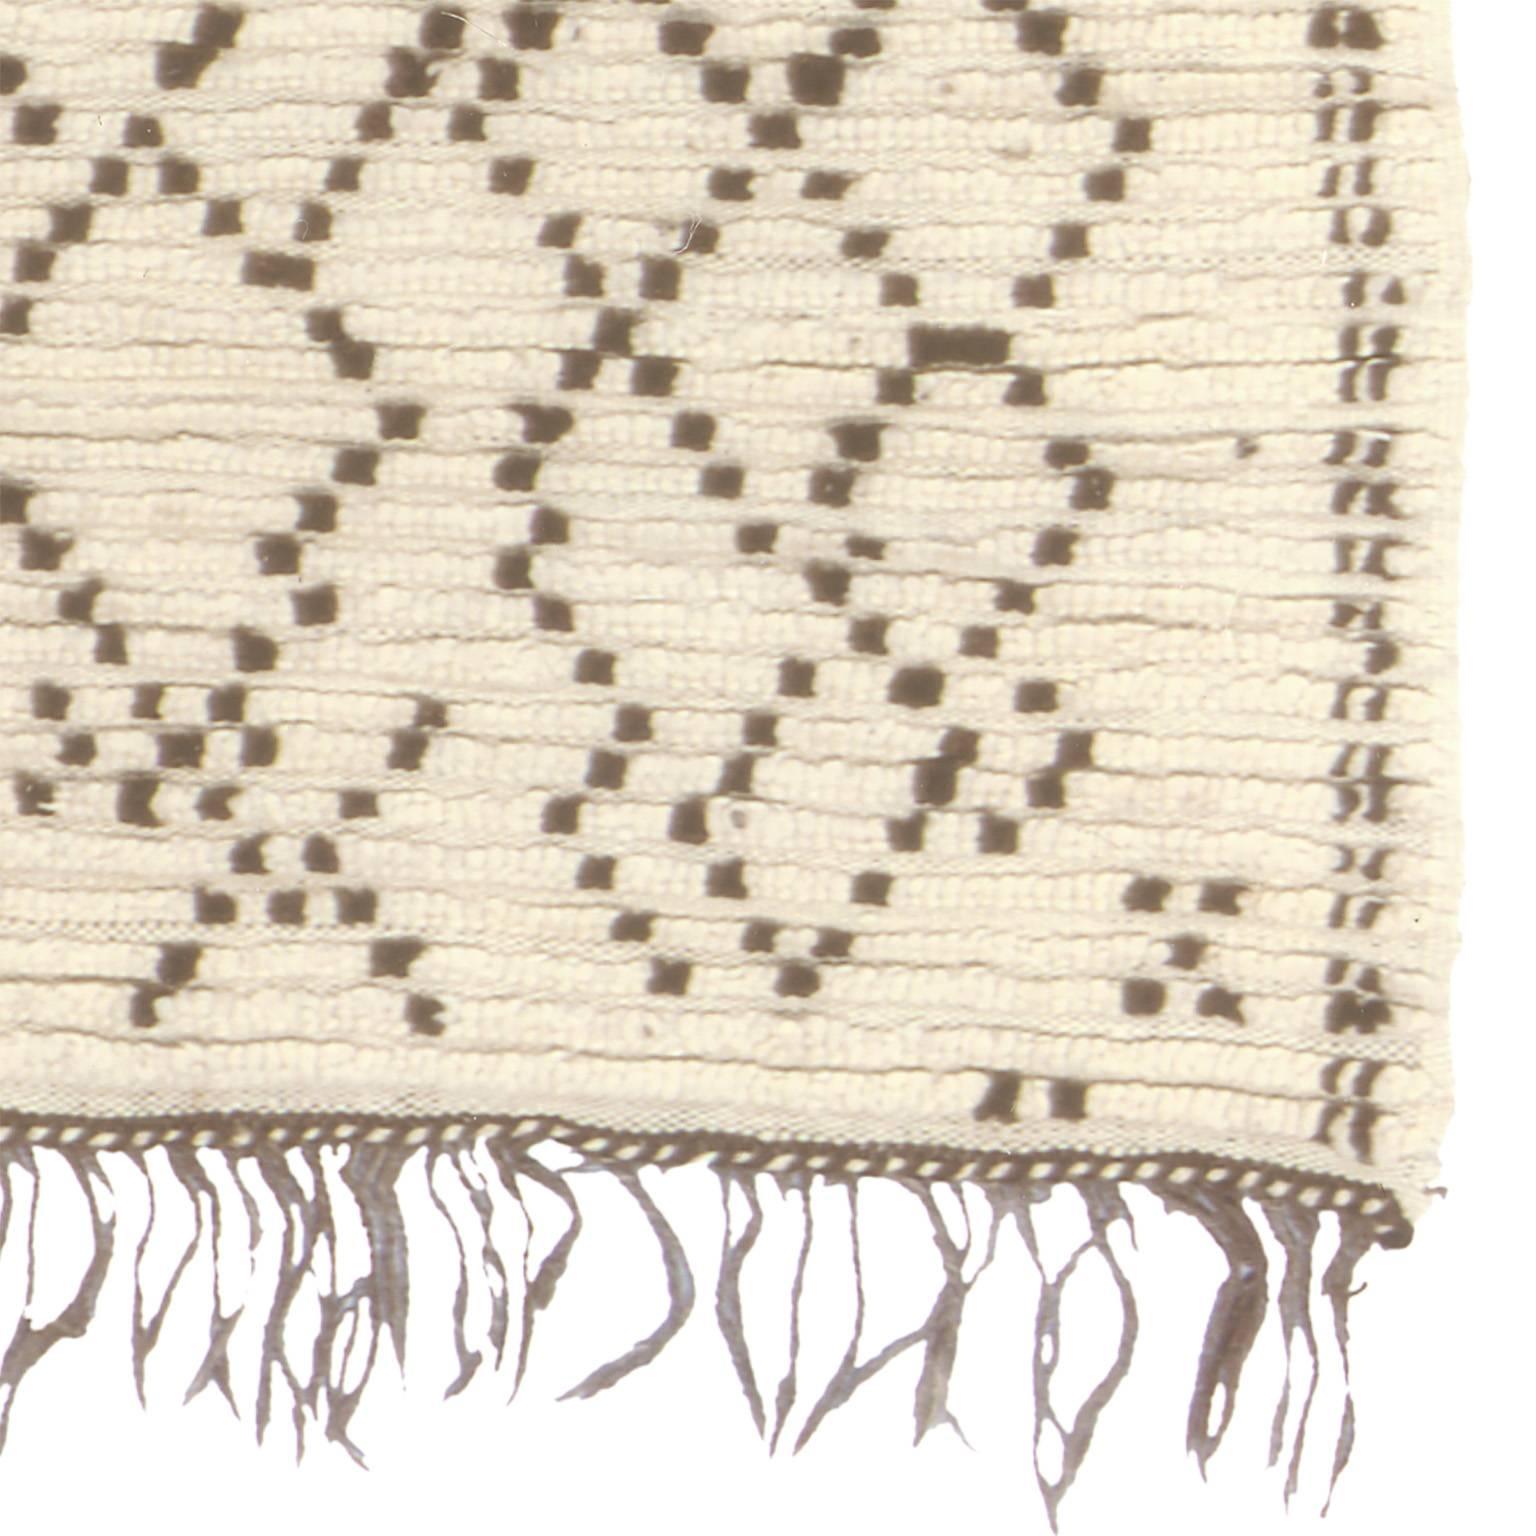 Vintage Berber carpet
Morocco, circa mid-20th century
100% wool
Handwoven.